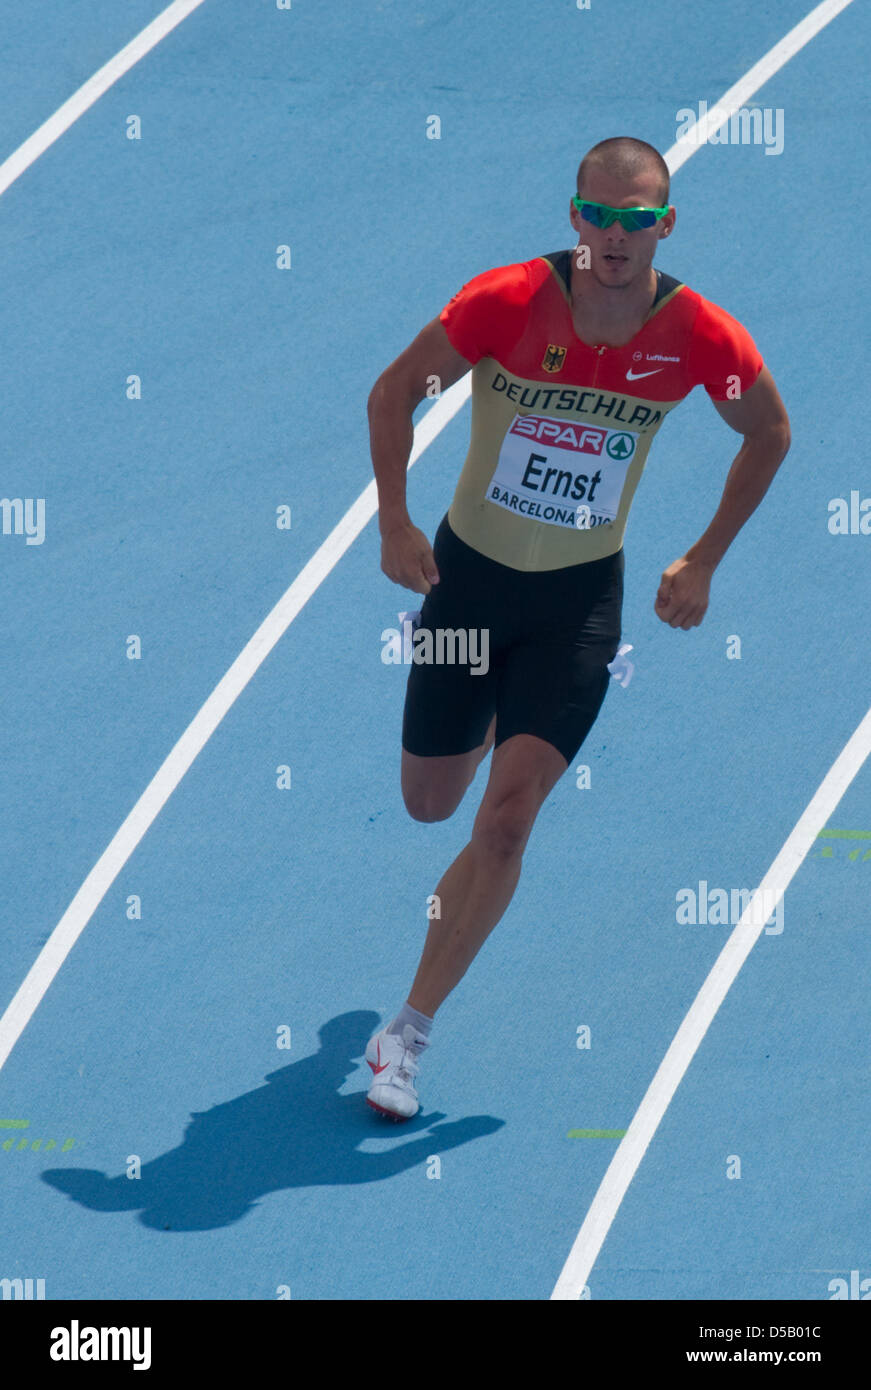 German sprinter Sebastian Ernst performs during the 200 metres run at the European Athletics Championships in Barcelona, Spain, 29 July 2010. Photo: Bernd Thissen Stock Photo